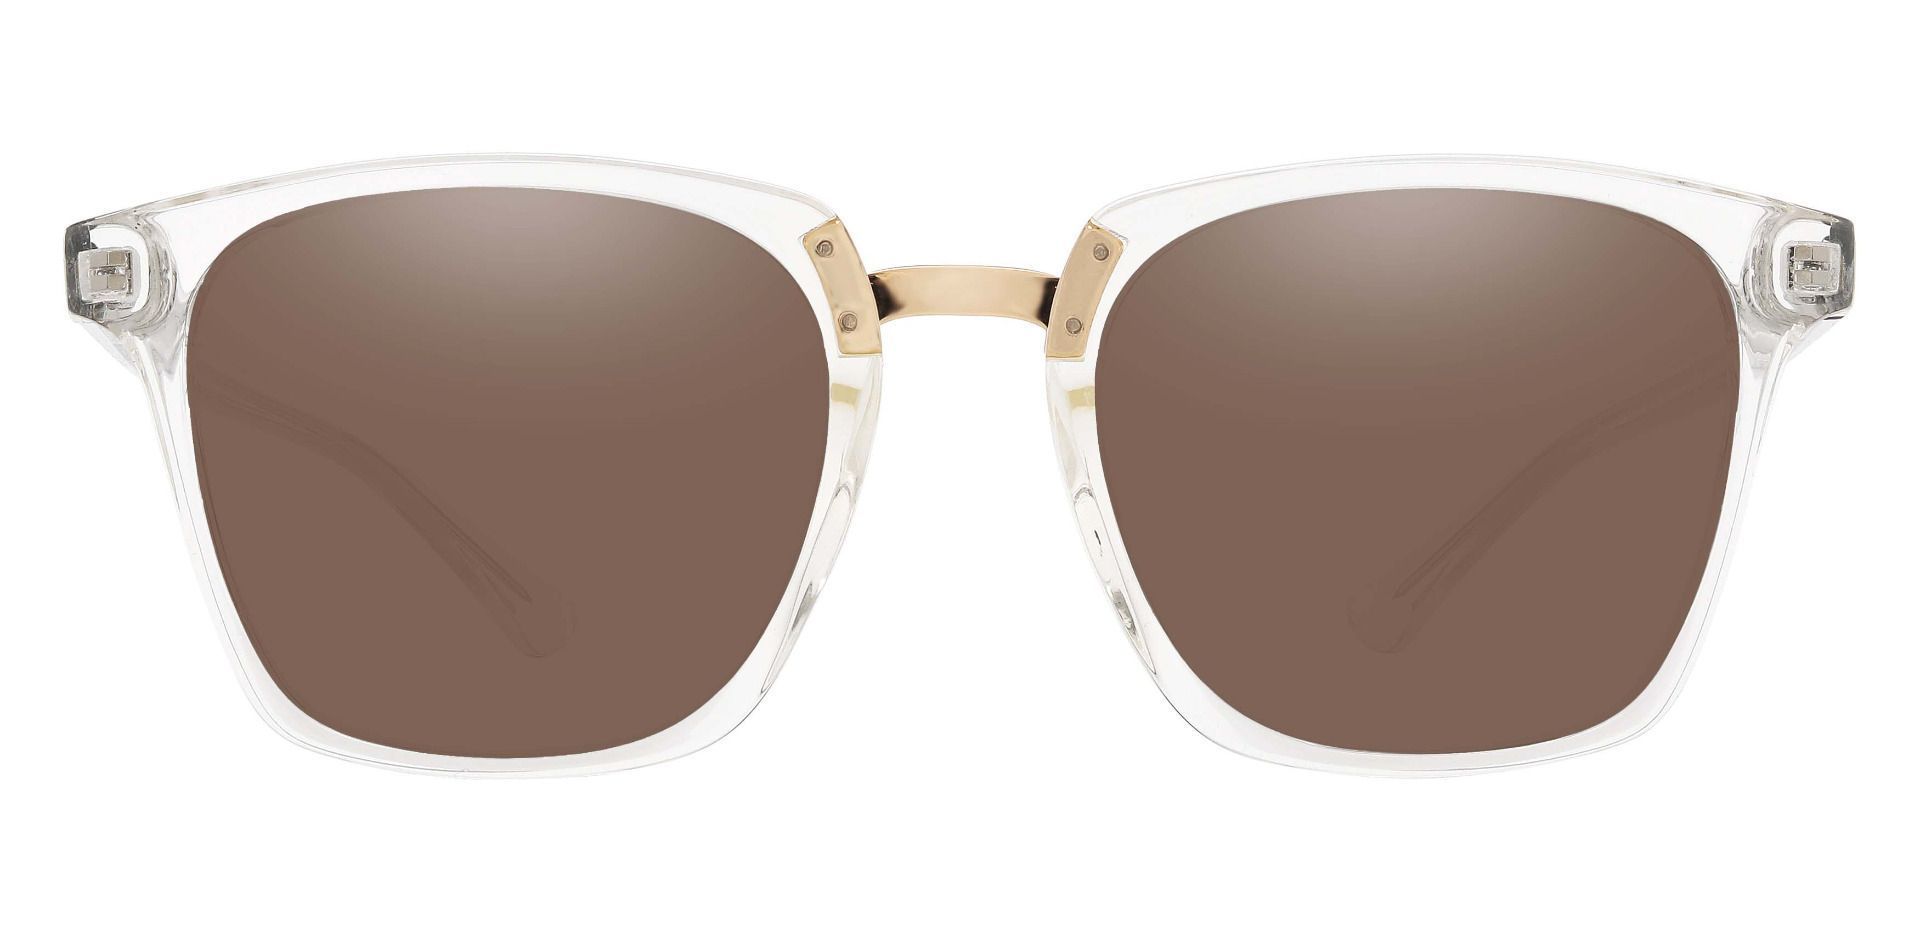 Delta Square Prescription Sunglasses - Clear Frame With Brown Lenses